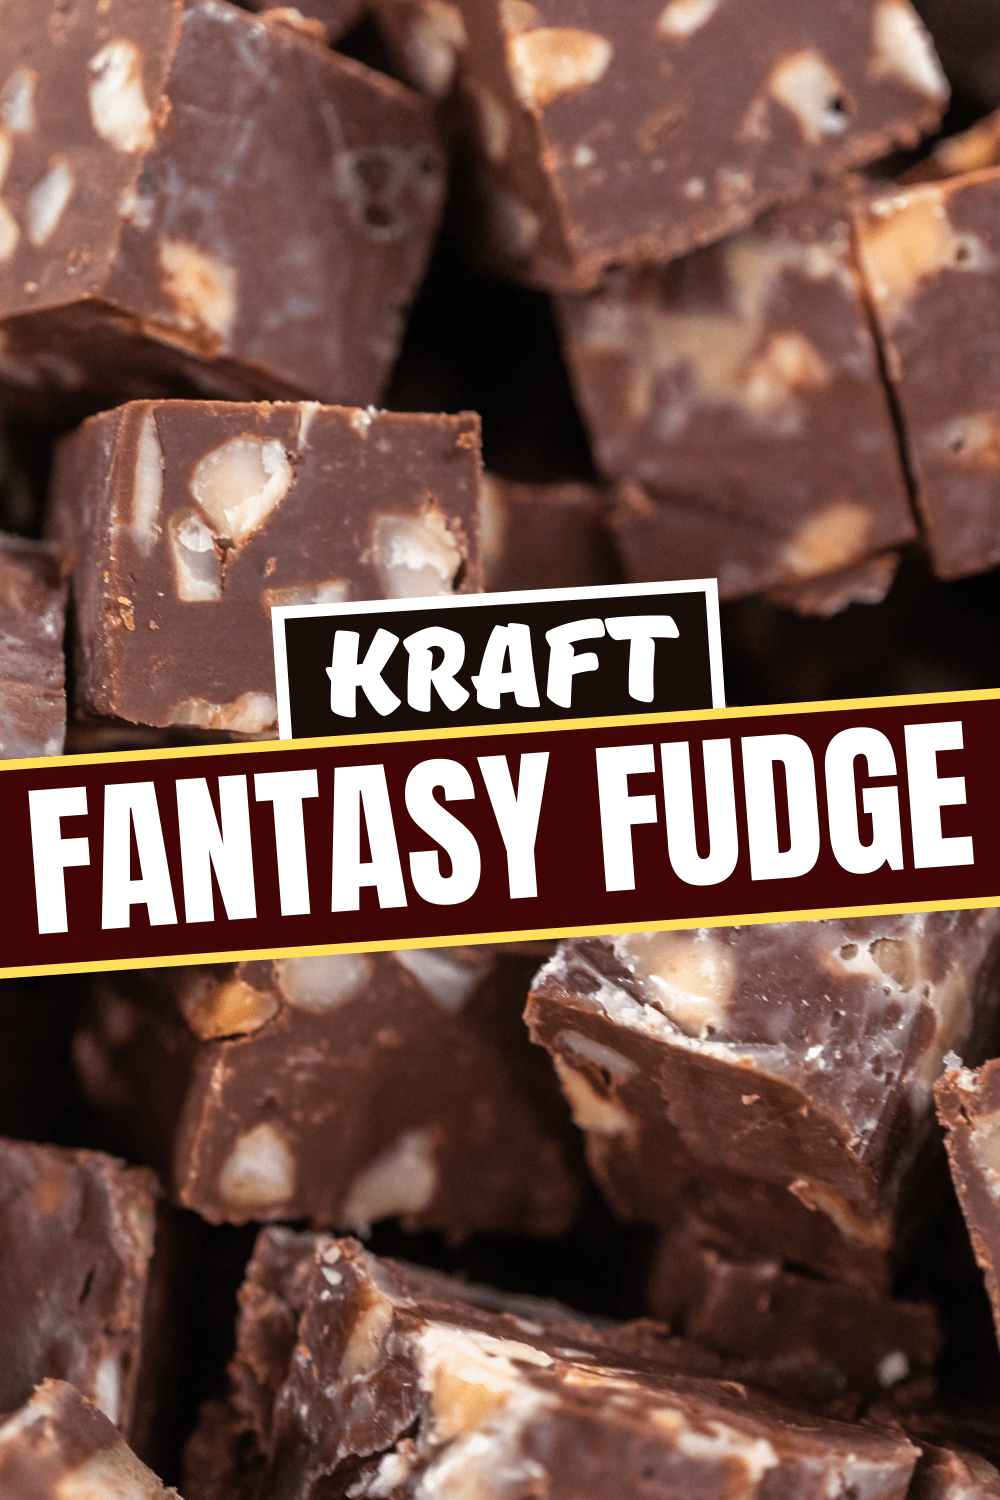 Kraft Fantasy Fudge Insanely Good